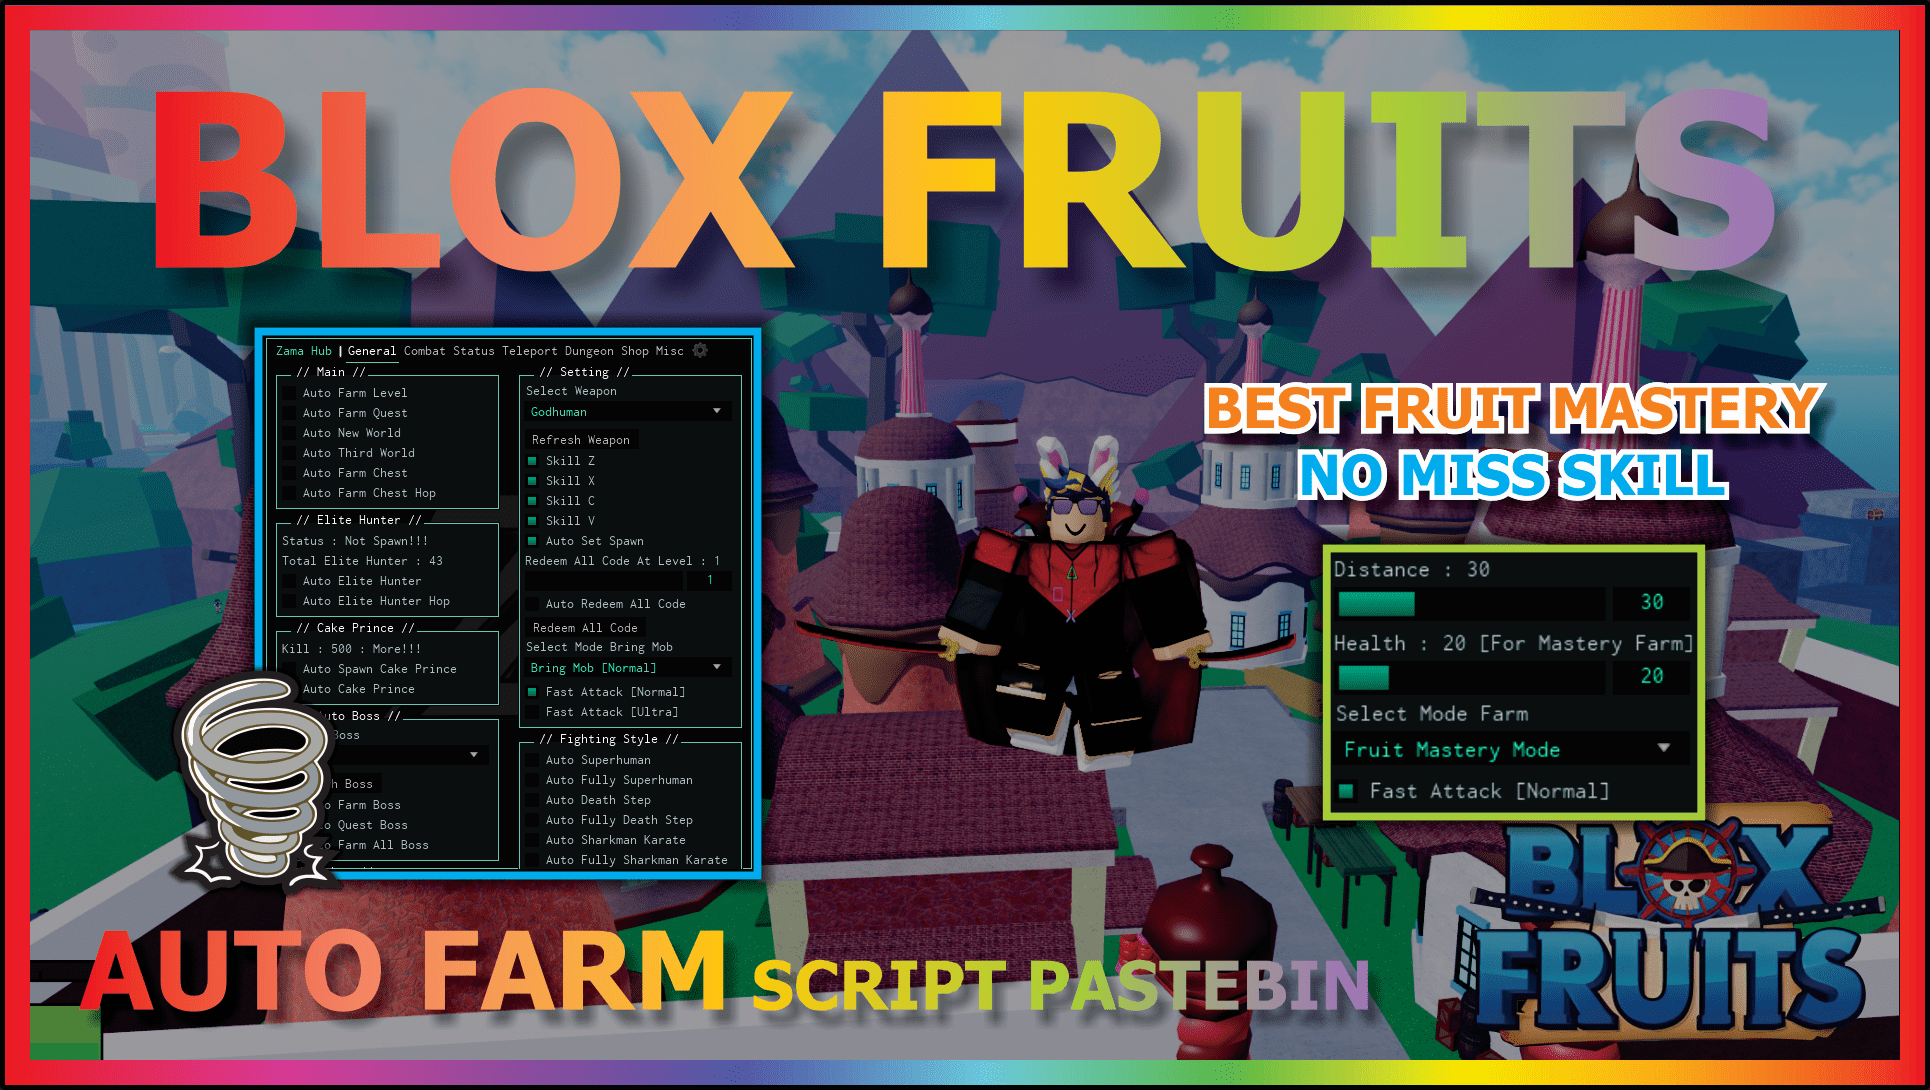 Script Blox Fruit - Magnattafps